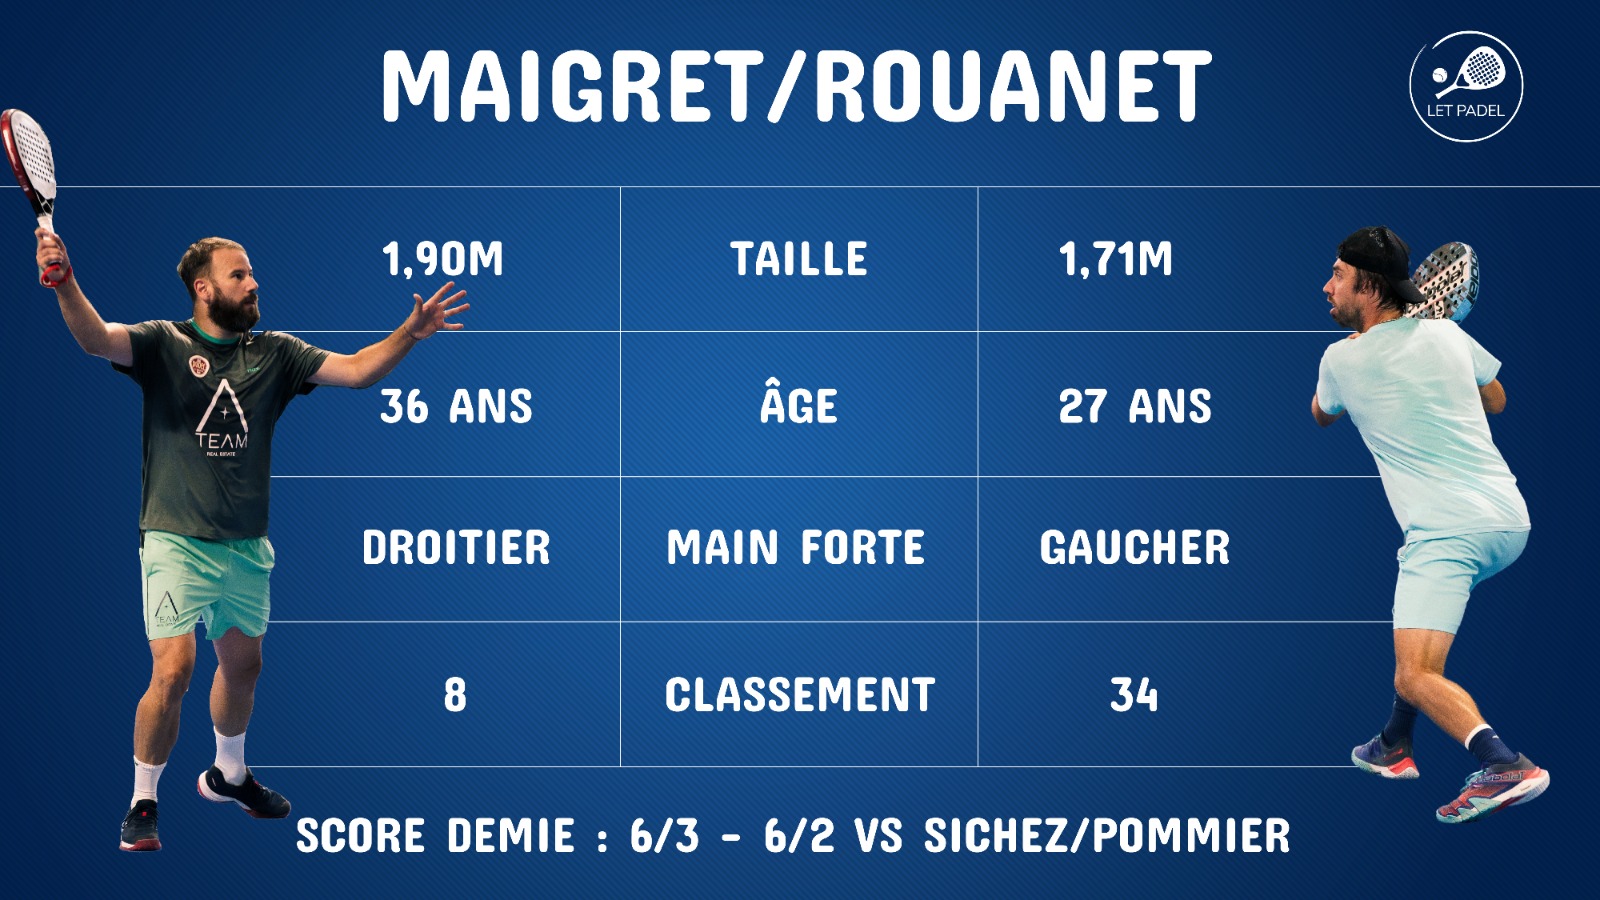 Rouanet Maigret